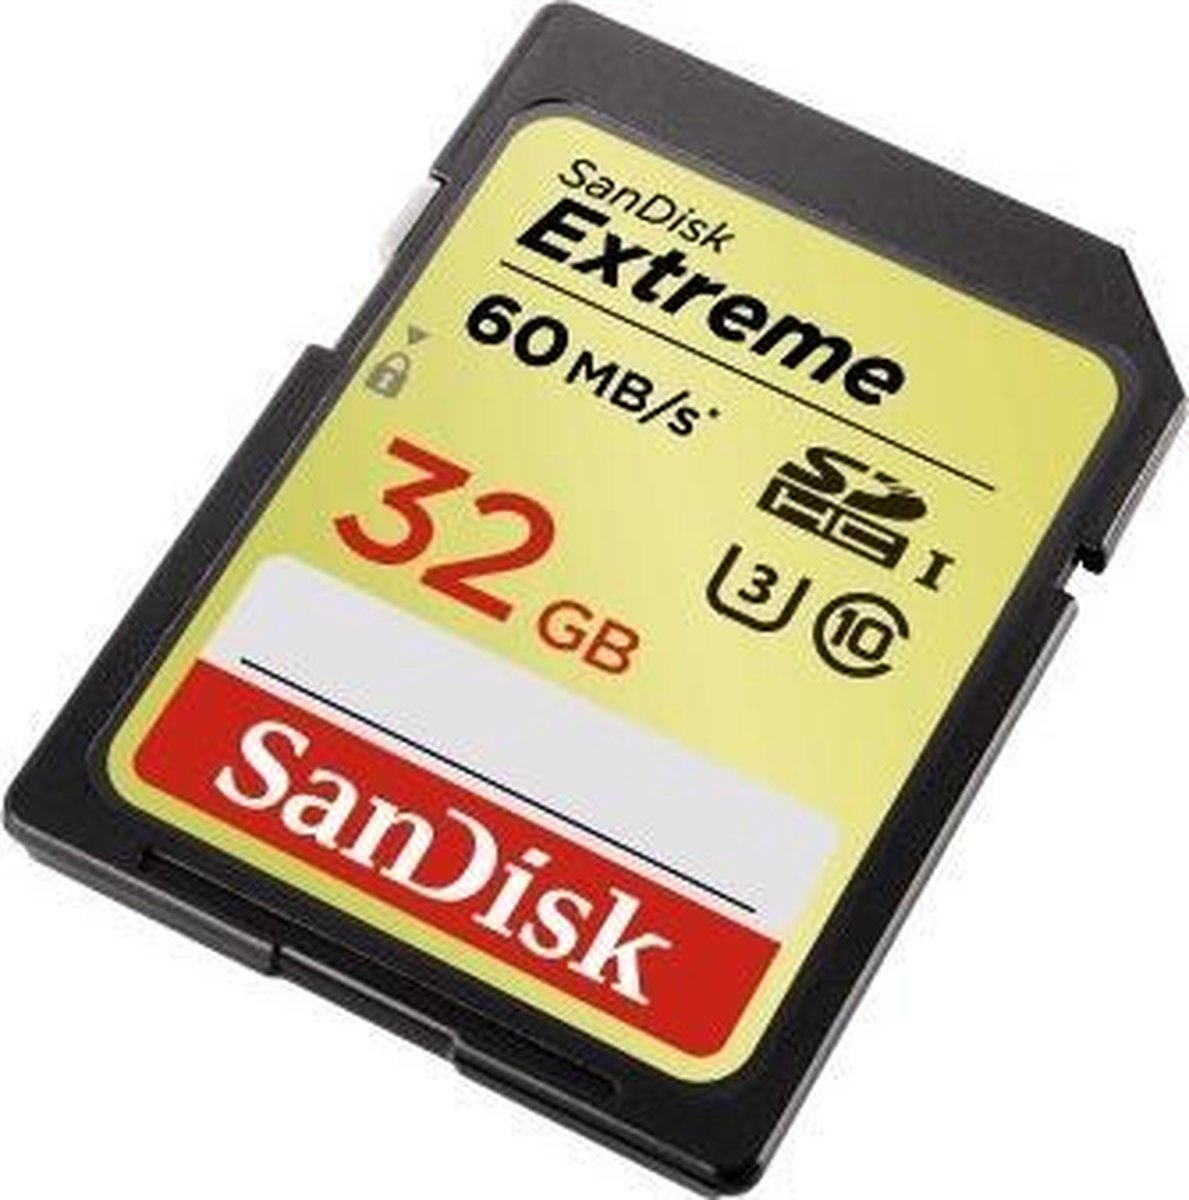 Glad Gehakt Geweldige eik Sandisk Extreme SD kaart 32 GB | bol.com